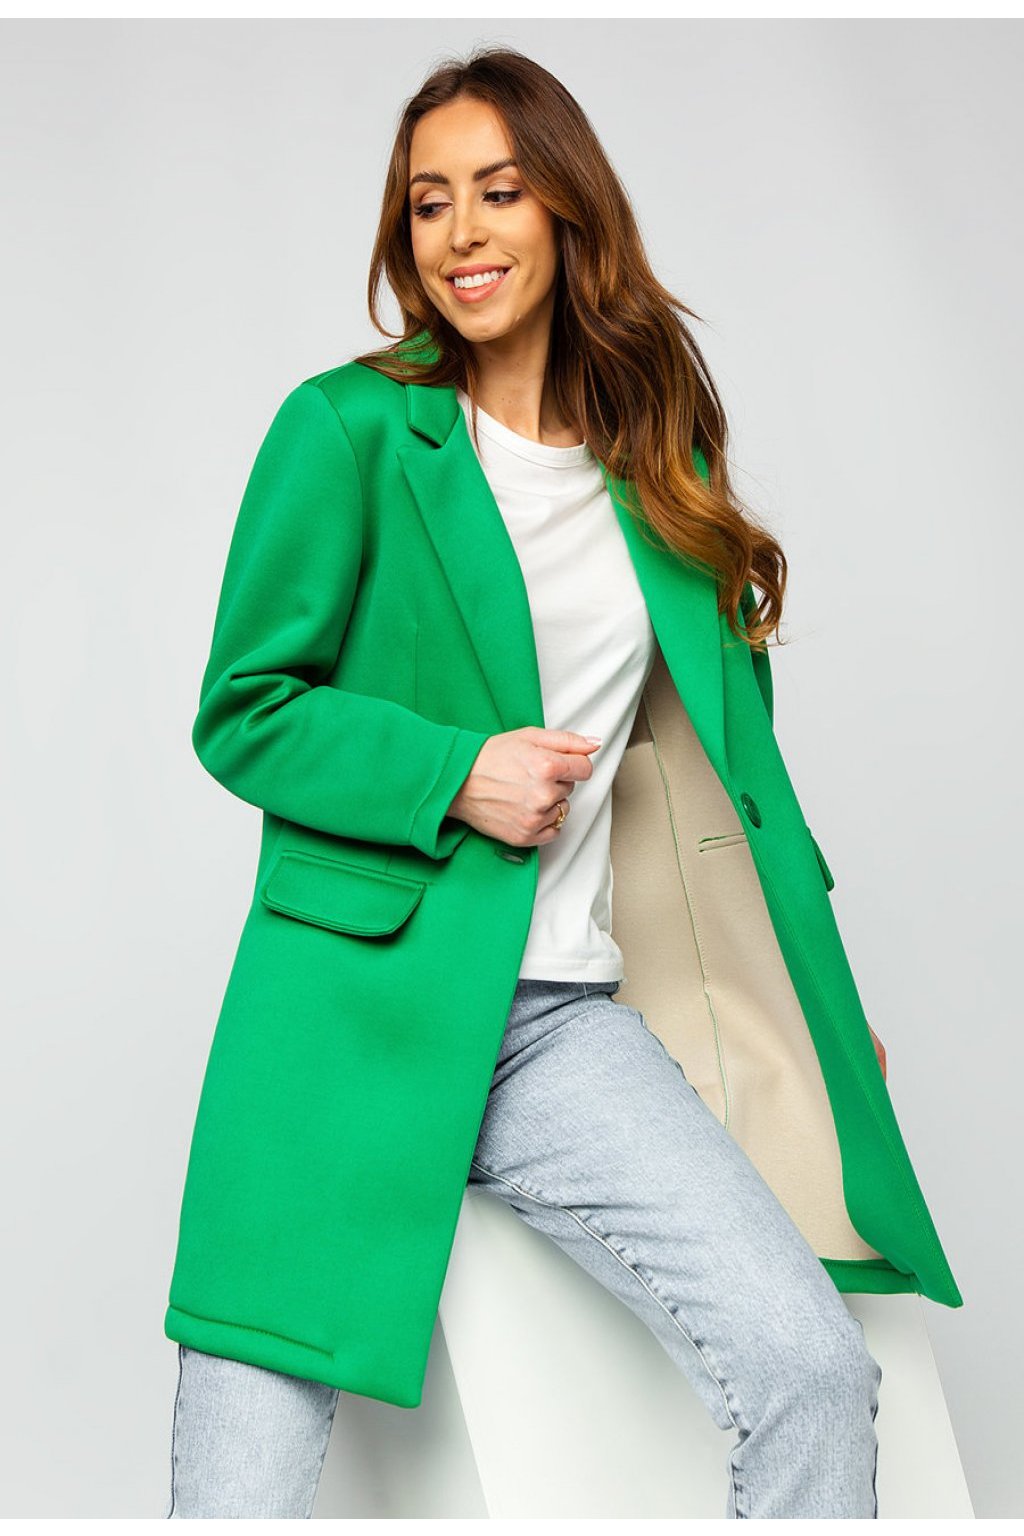 Zelený dámský kabát | FASHIONSUGAR e-shop